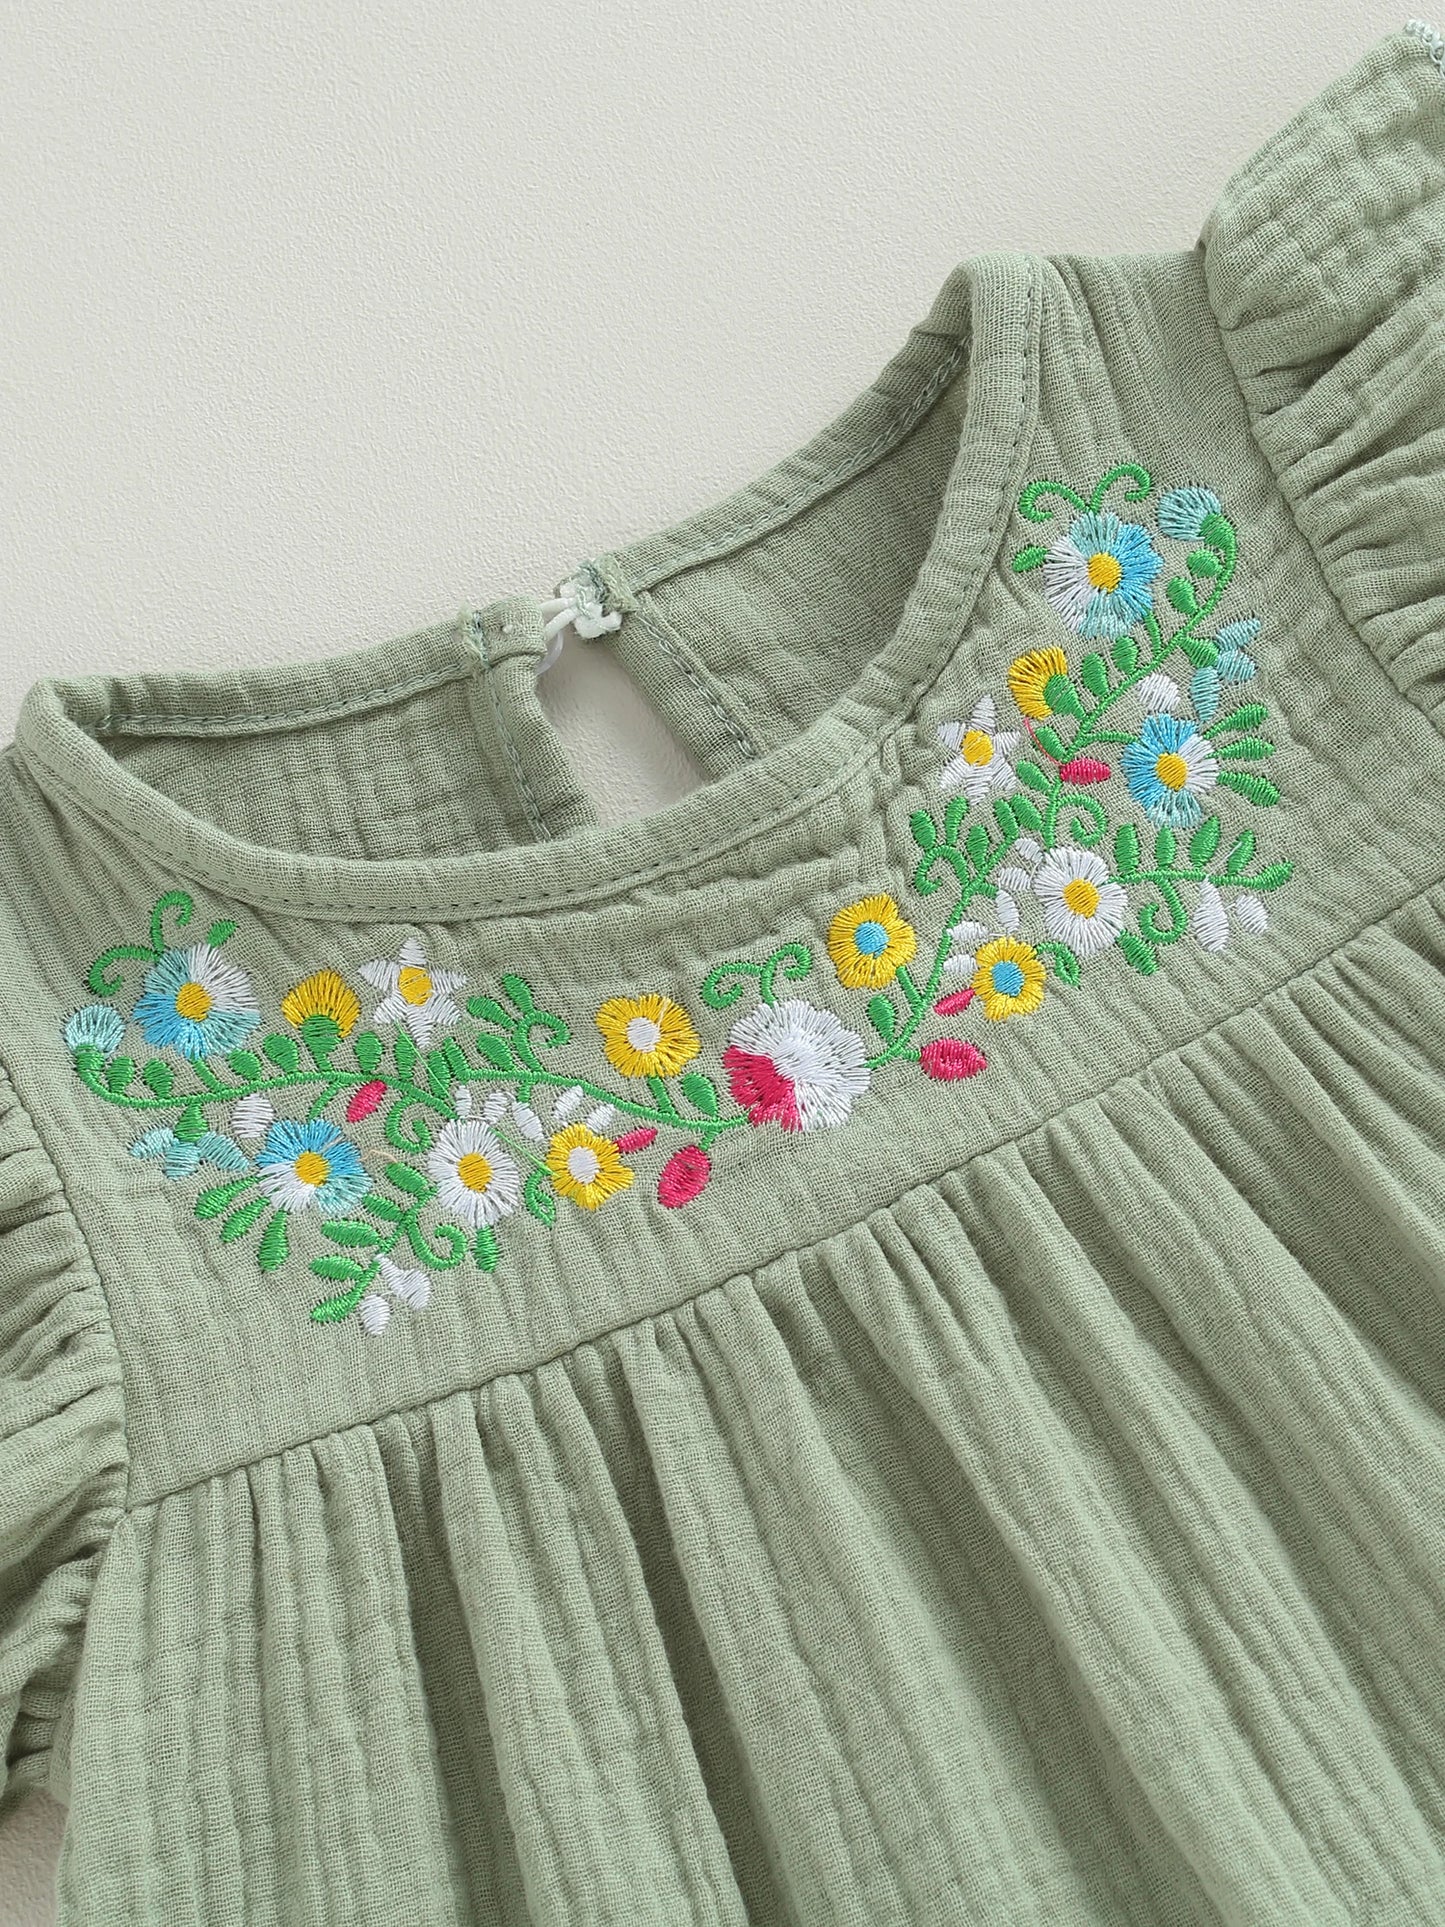 Cotton Linen Dress Toddler Girls Sleeveless Ruffle Sundress Floral Embroidered Flare Dress Baby Kids Summer Clothes (Pink 1-2）